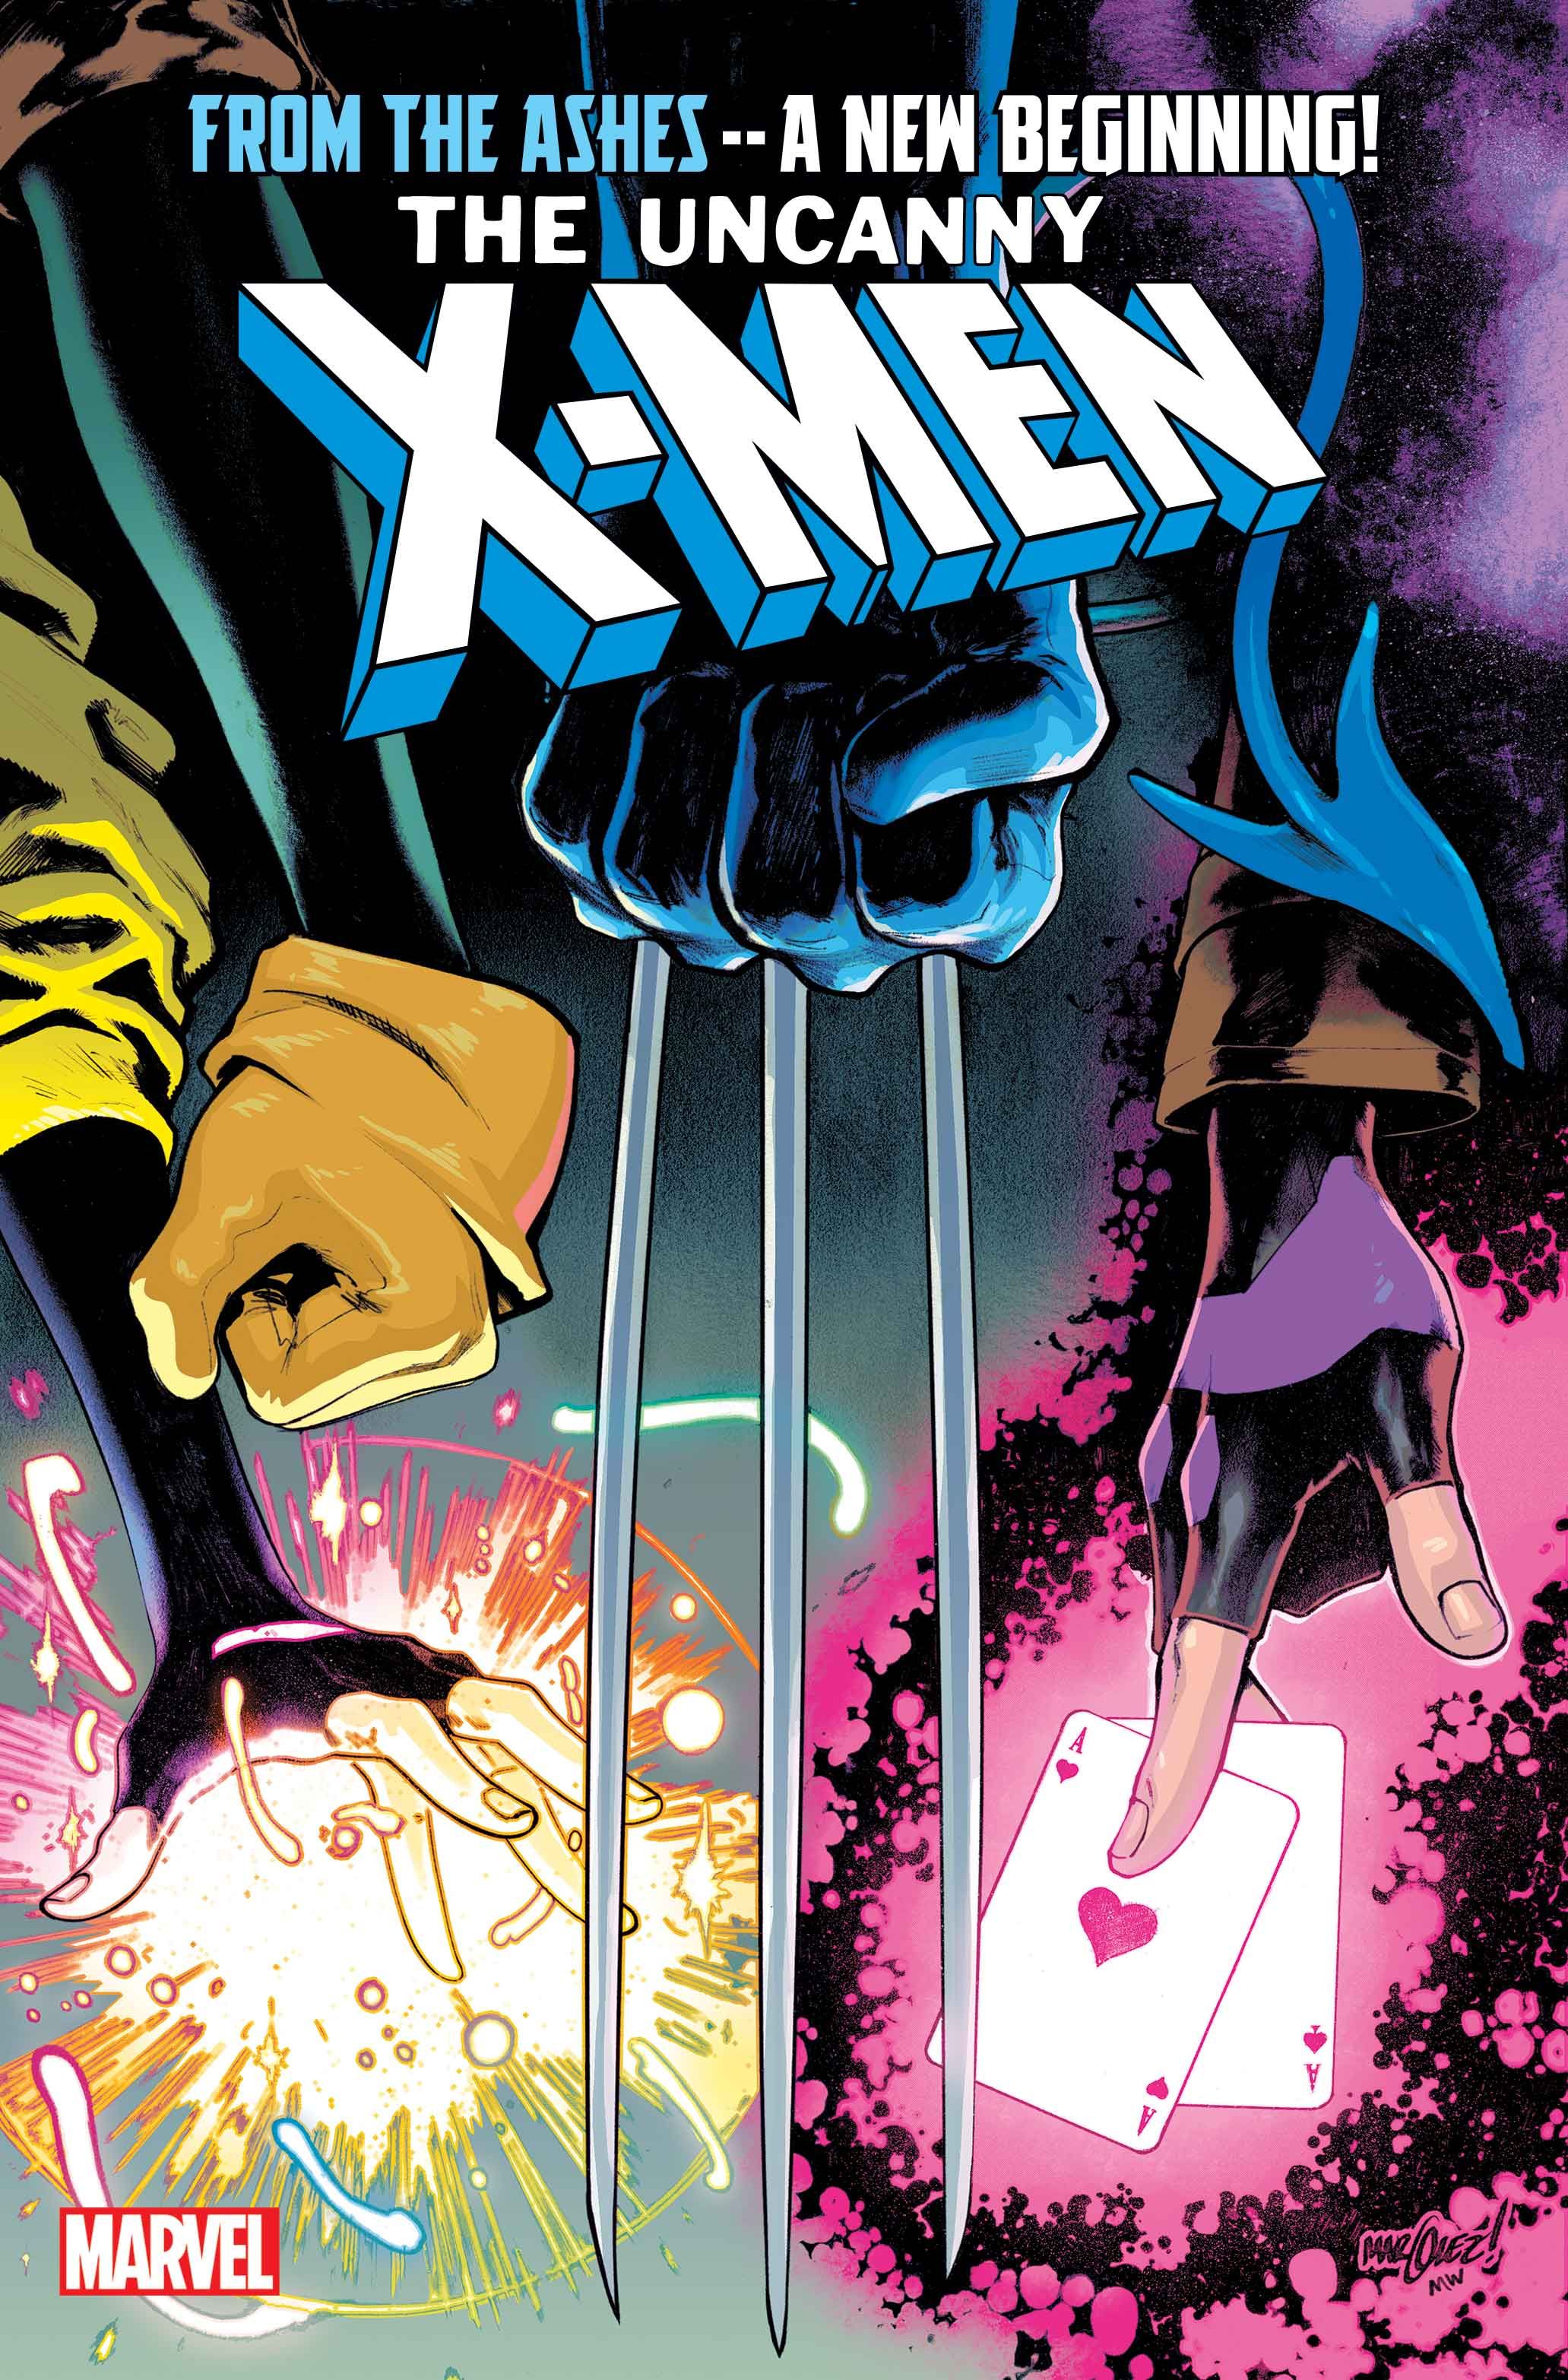 The cover of Uncanny X-Men #1